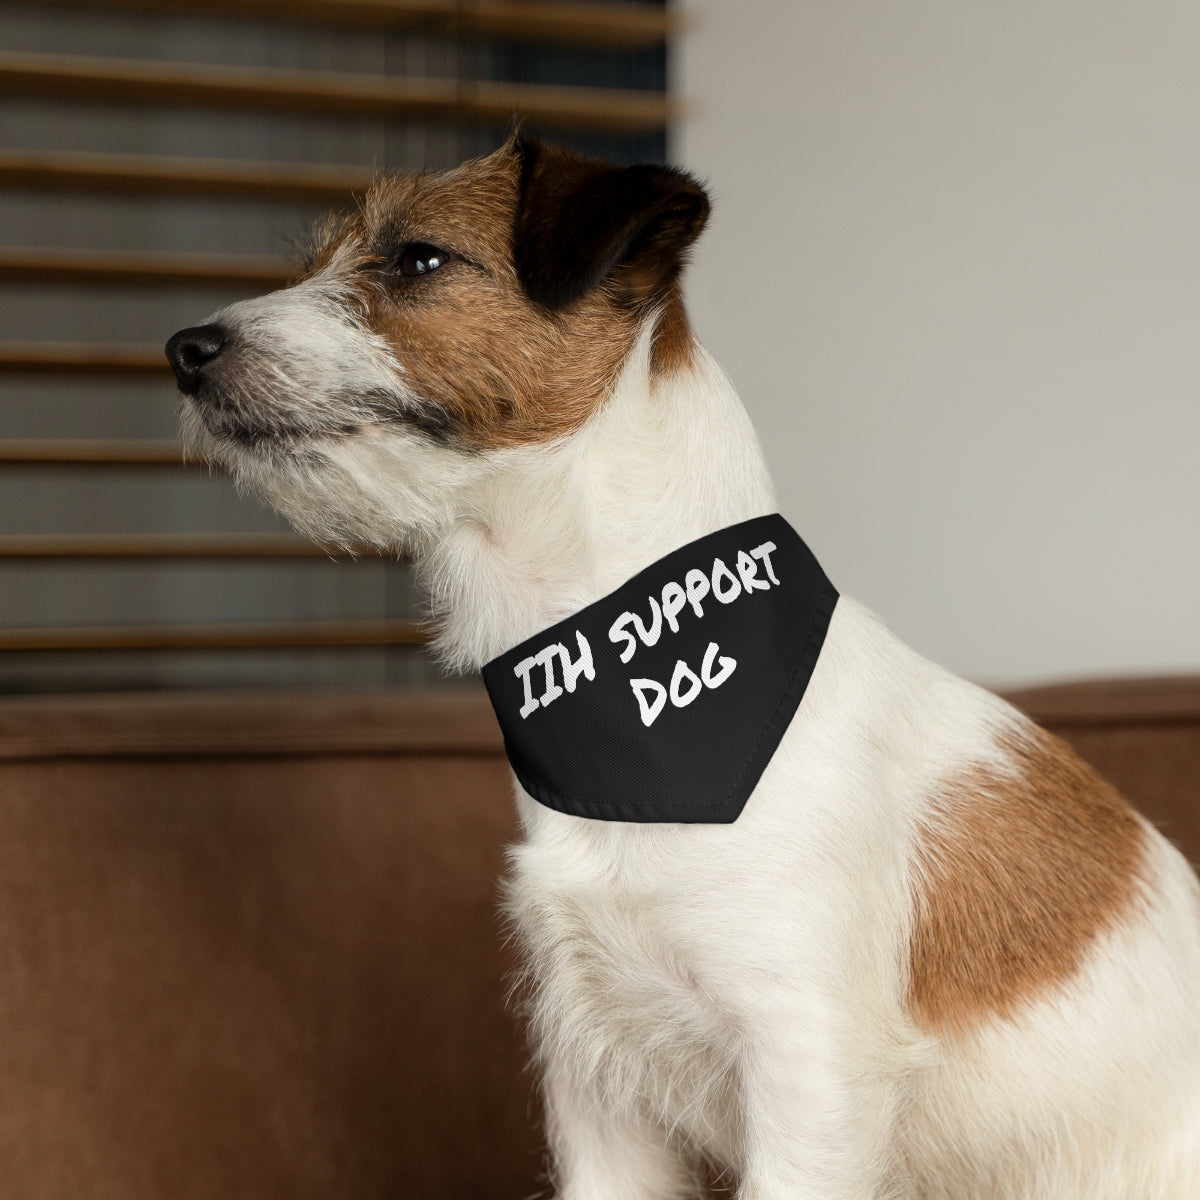 IIH Support Dog - Pet Bandana Collar